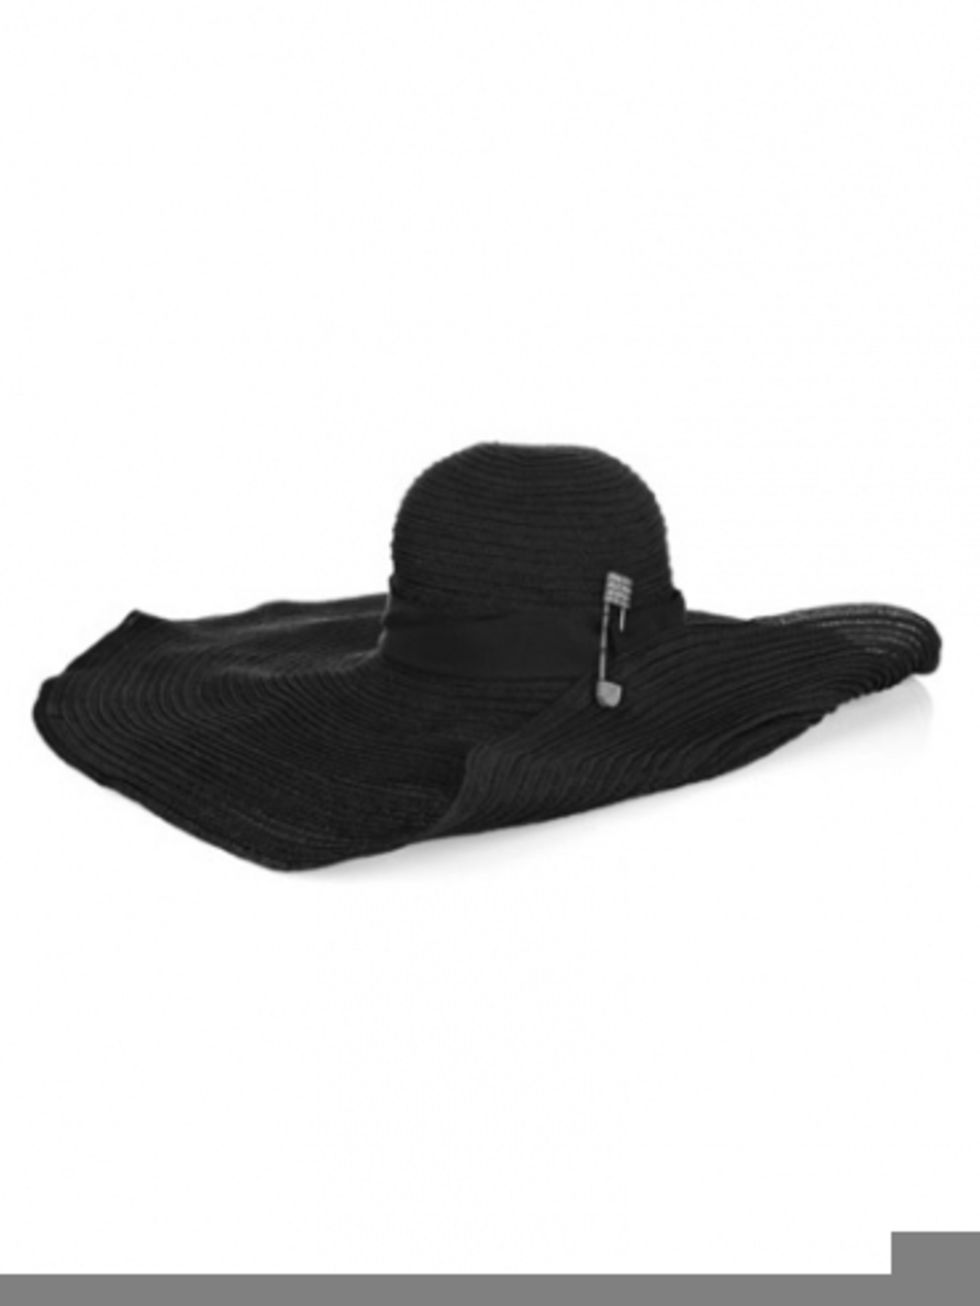 Hat, Headgear, Costume accessory, Black, Costume hat, Costume, Cricket cap, Bonnet, Graphics, 